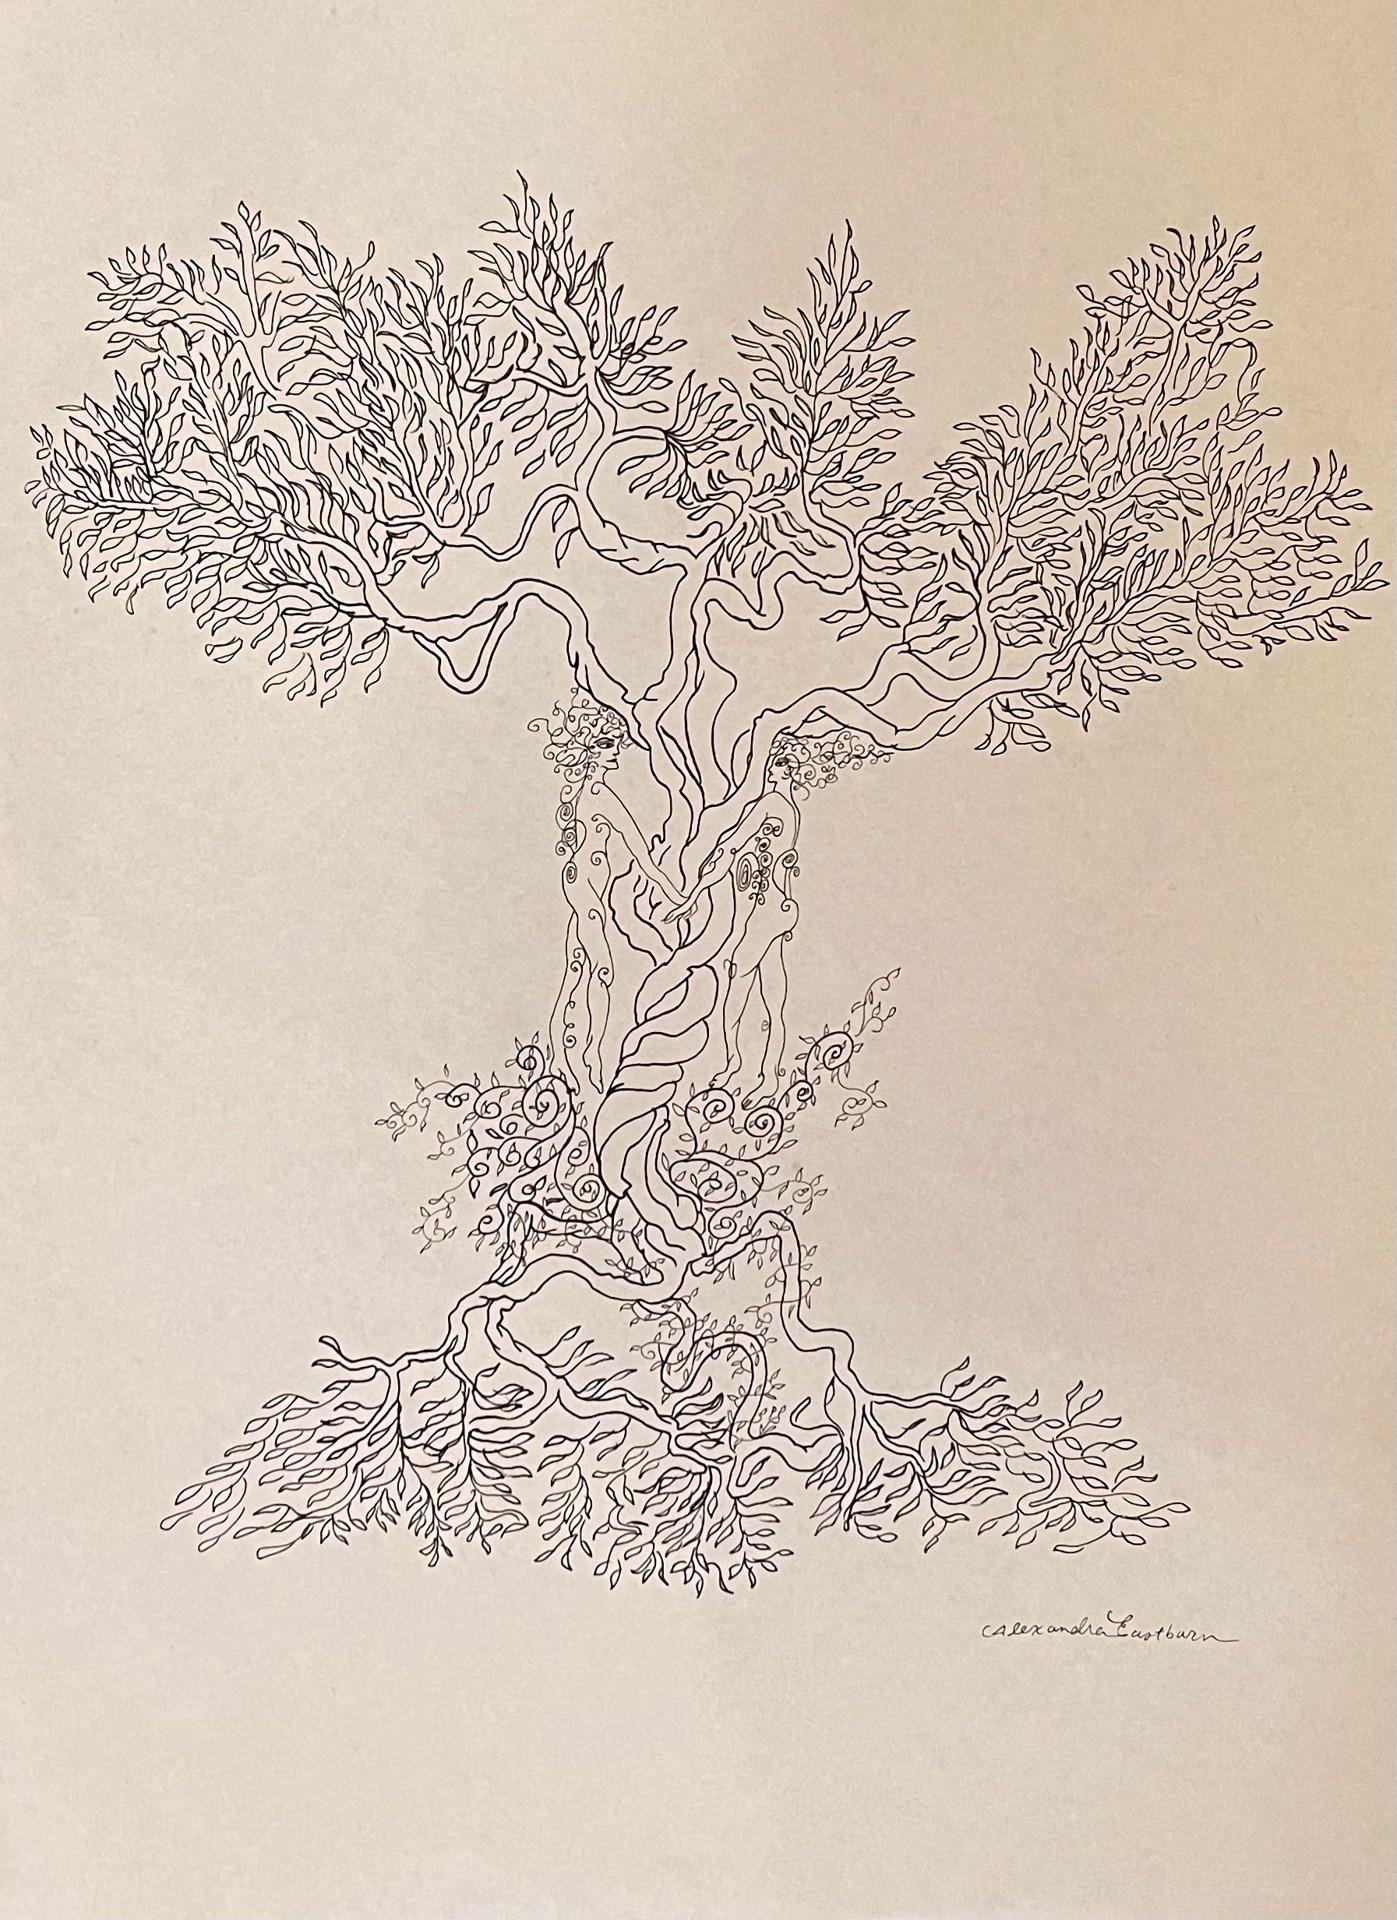 Alexandra Eastburn Figurative Art - Eternal Return, figurative drawing, ink, nature, trees